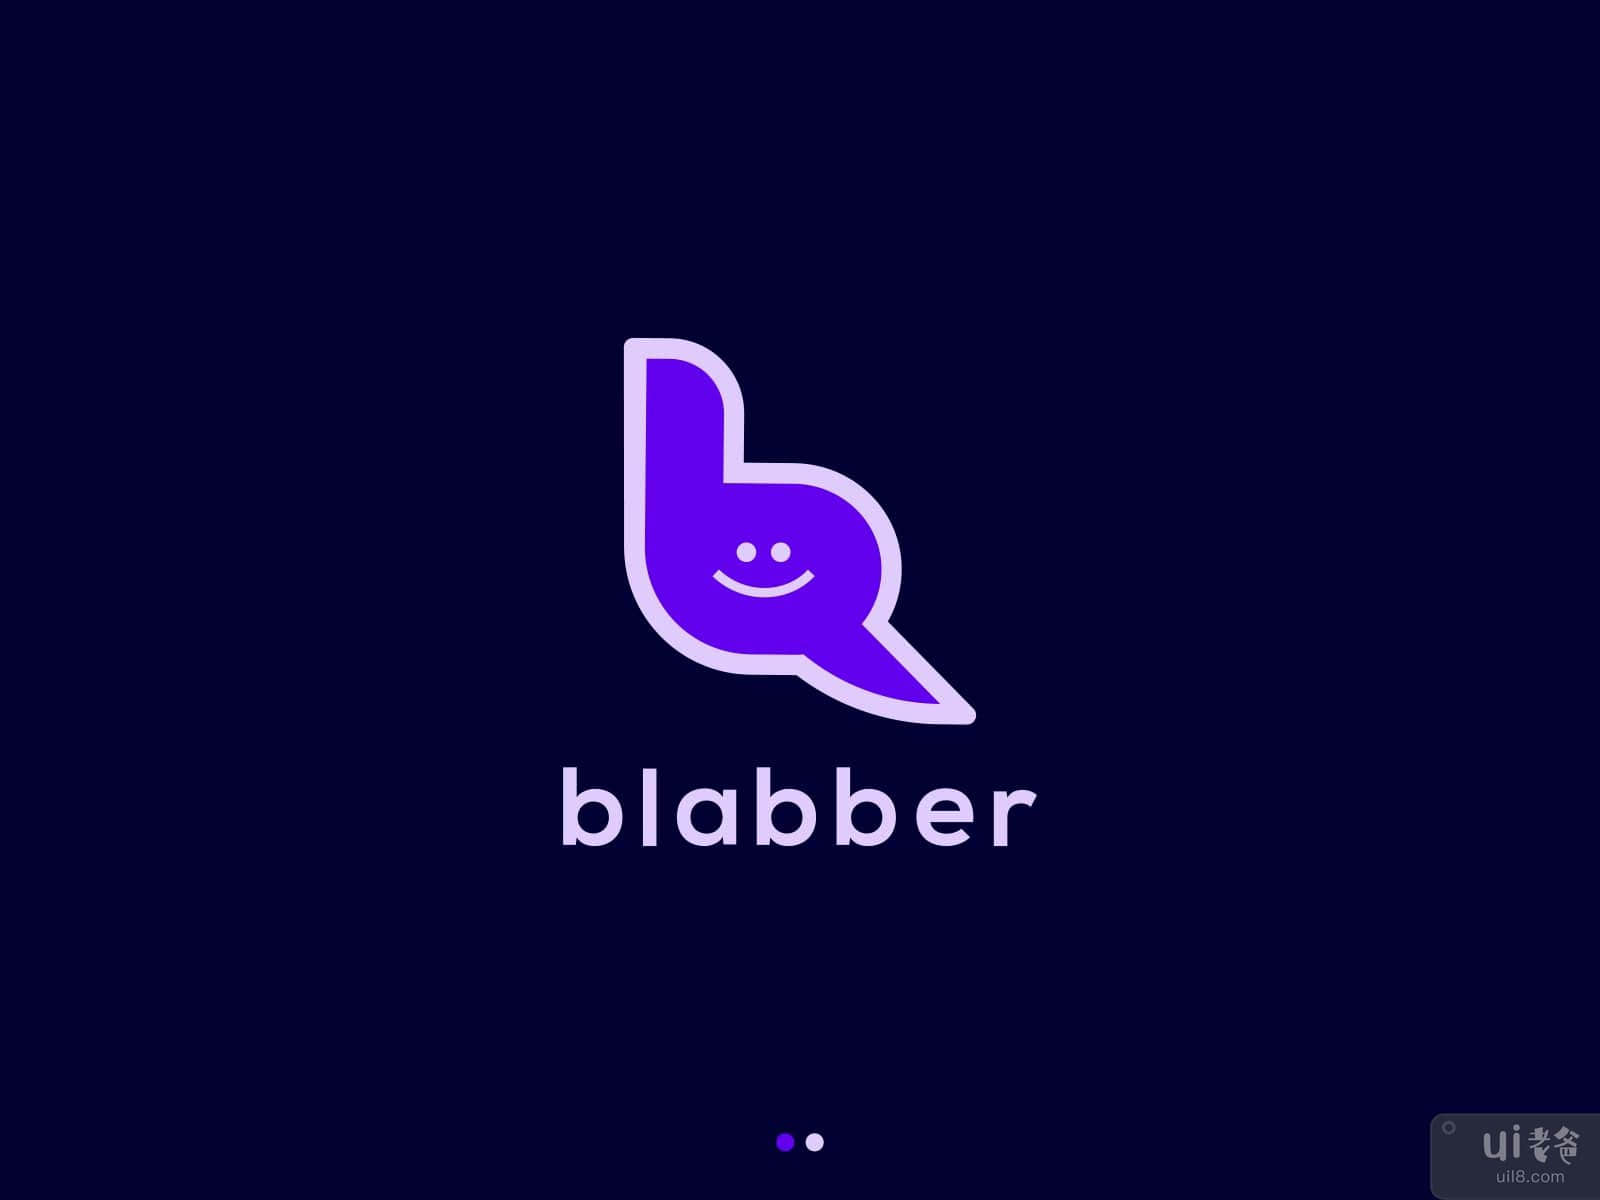 B and Chat Logo Design Concepts. blabber modern logo template